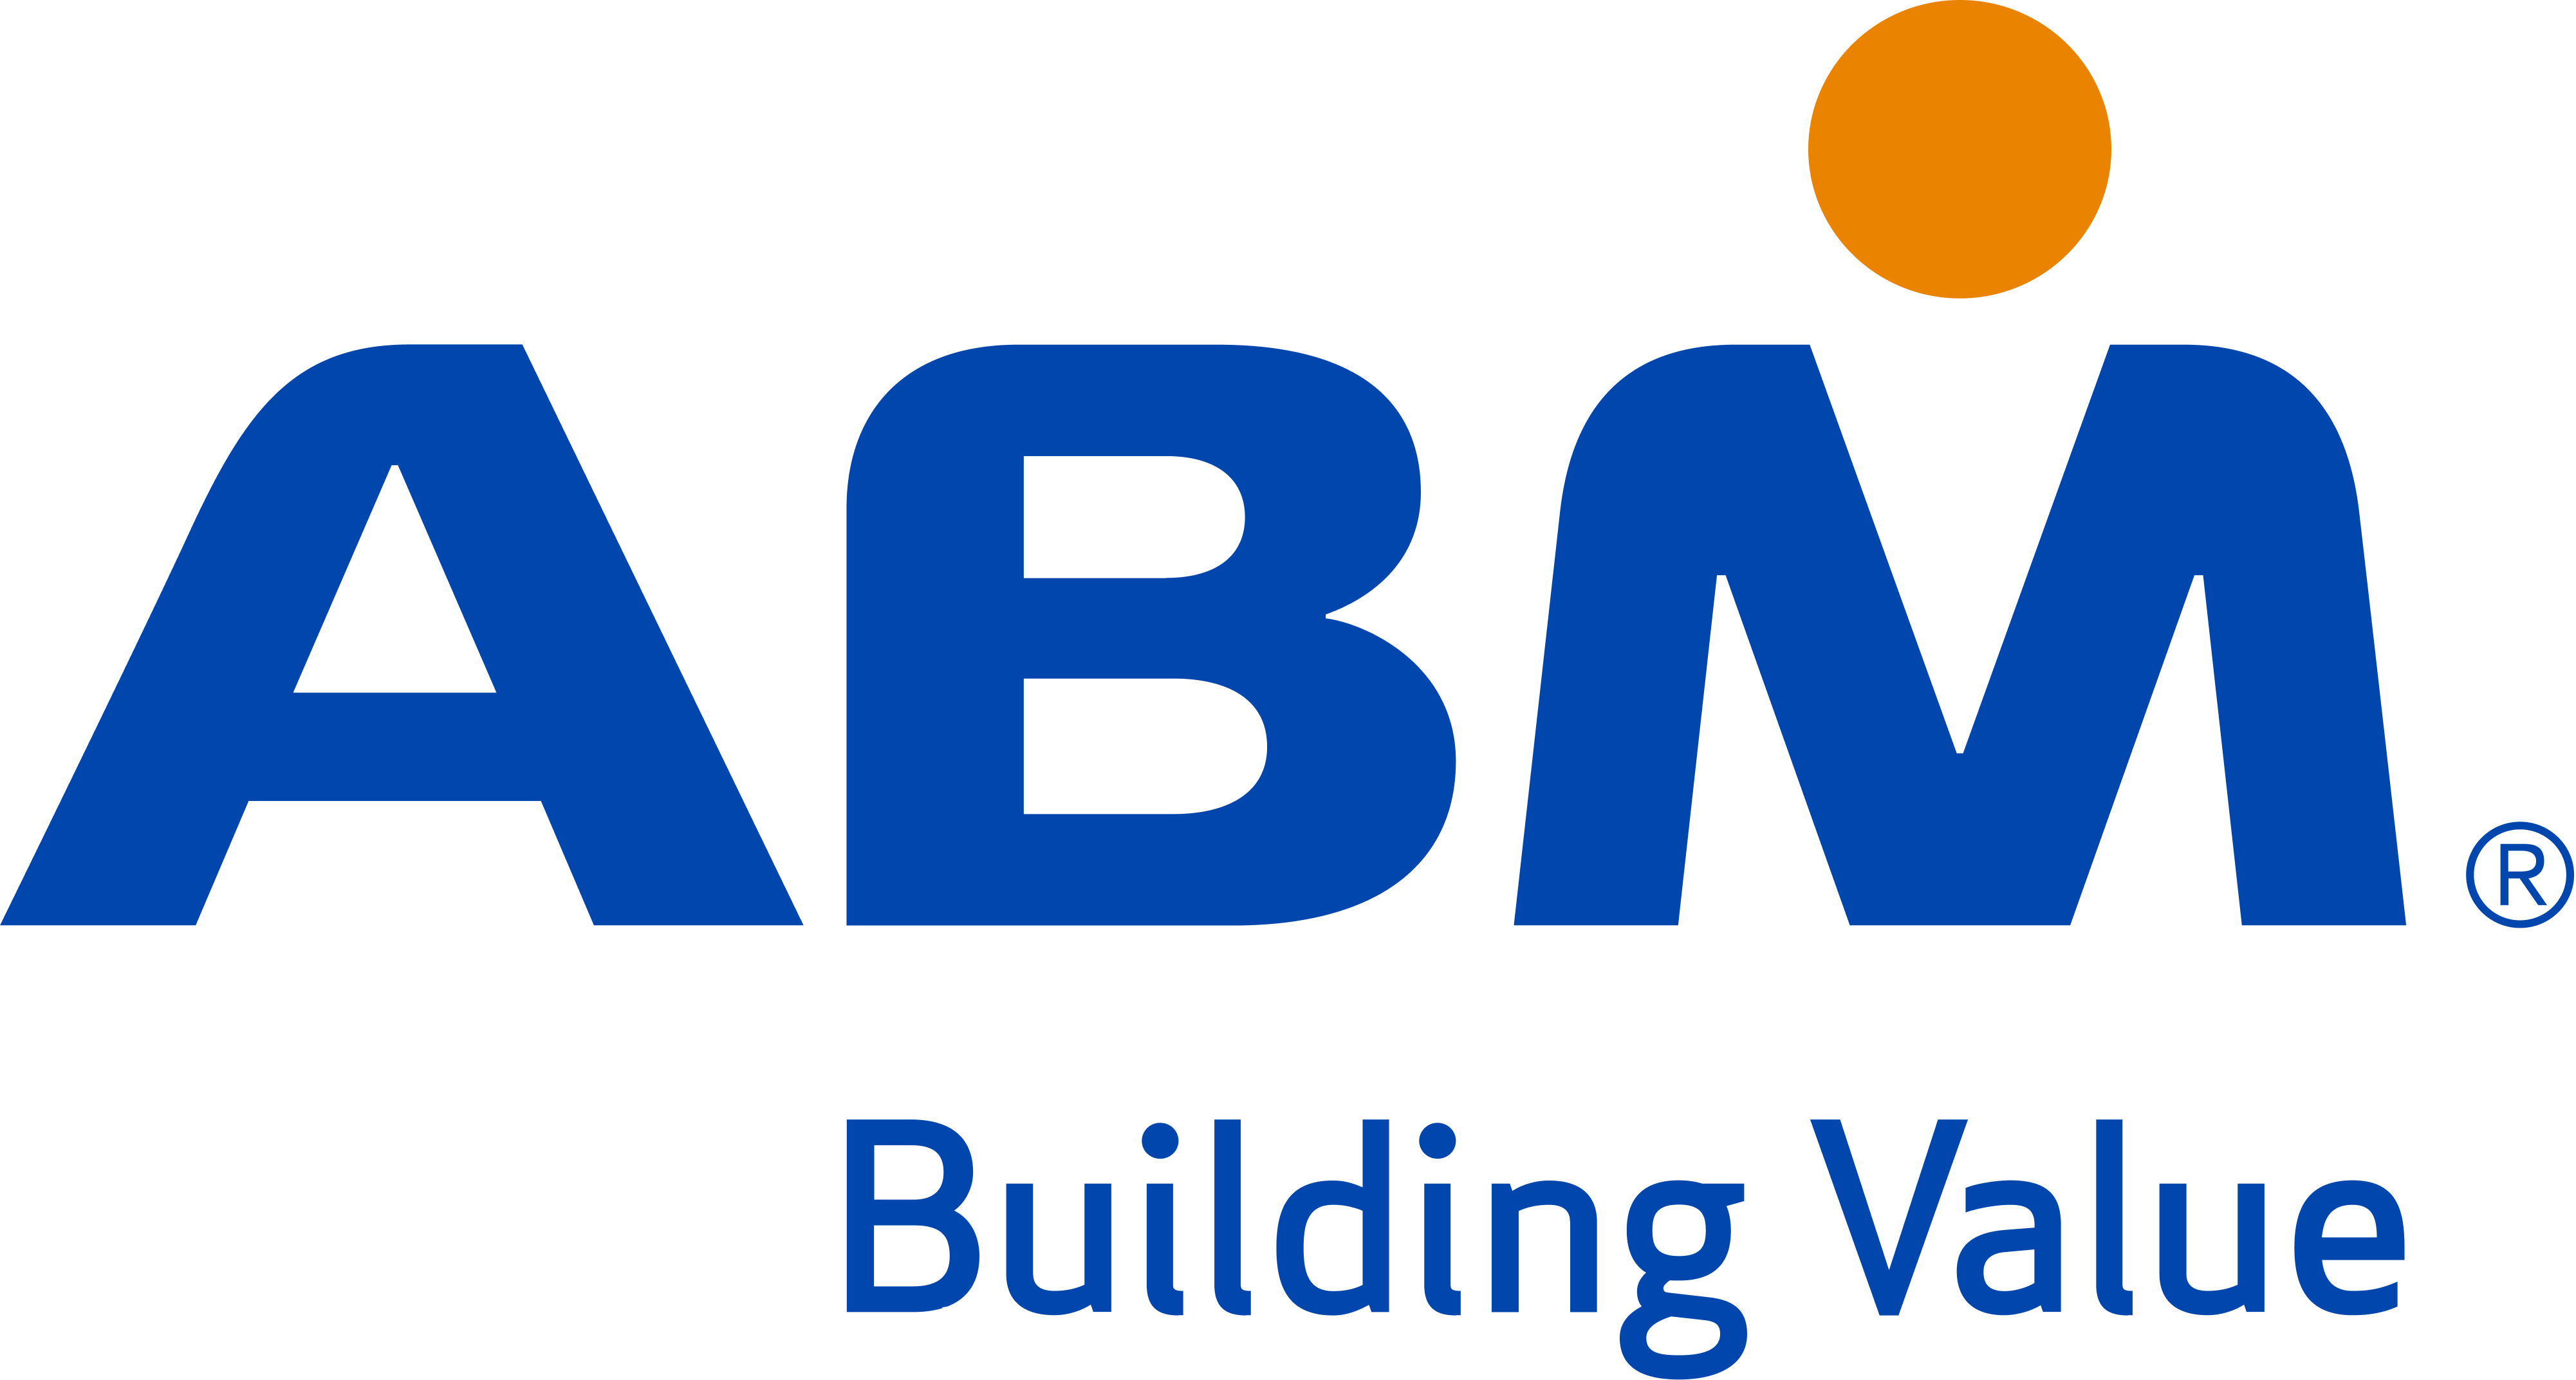 AMB building maintenance and facilities services company logo